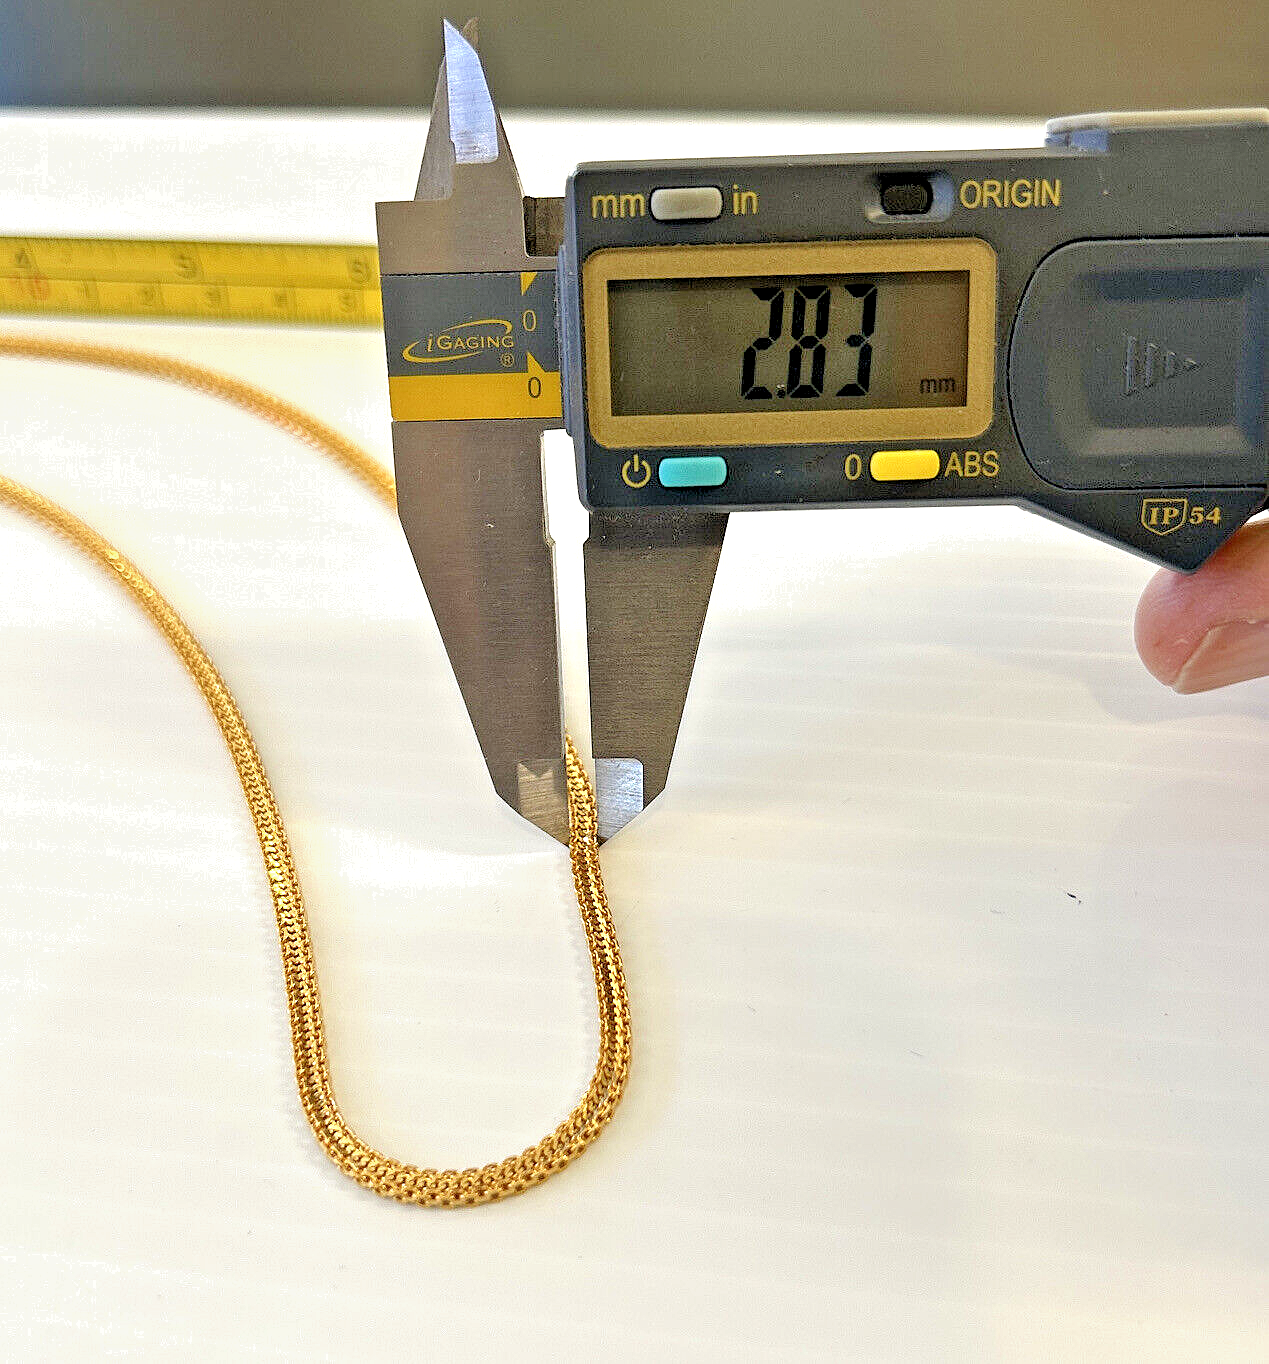 22k .916% Gold Rectangular Franco Chain 20" ~ 17.9 grams ~ 1.6x2.8mm